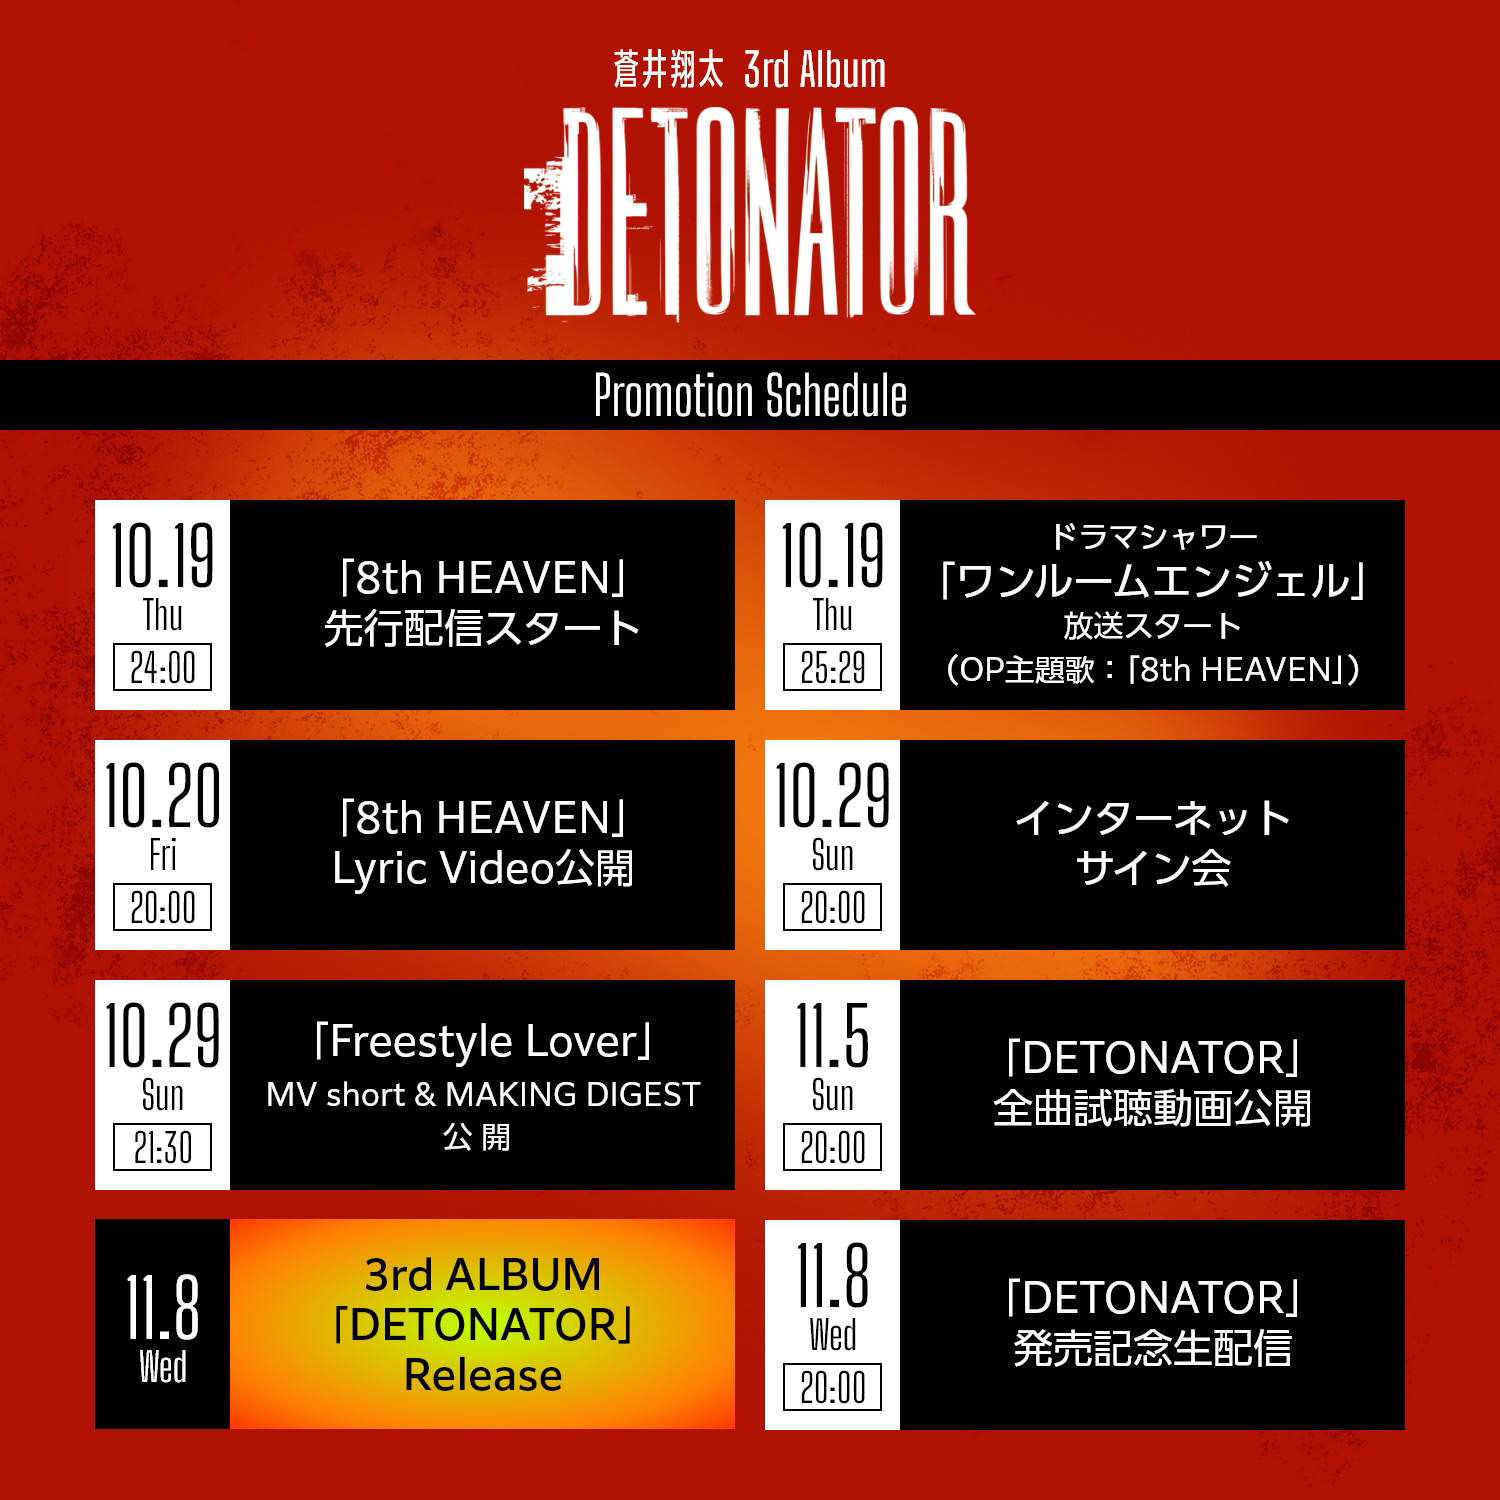 Promotion Schedule